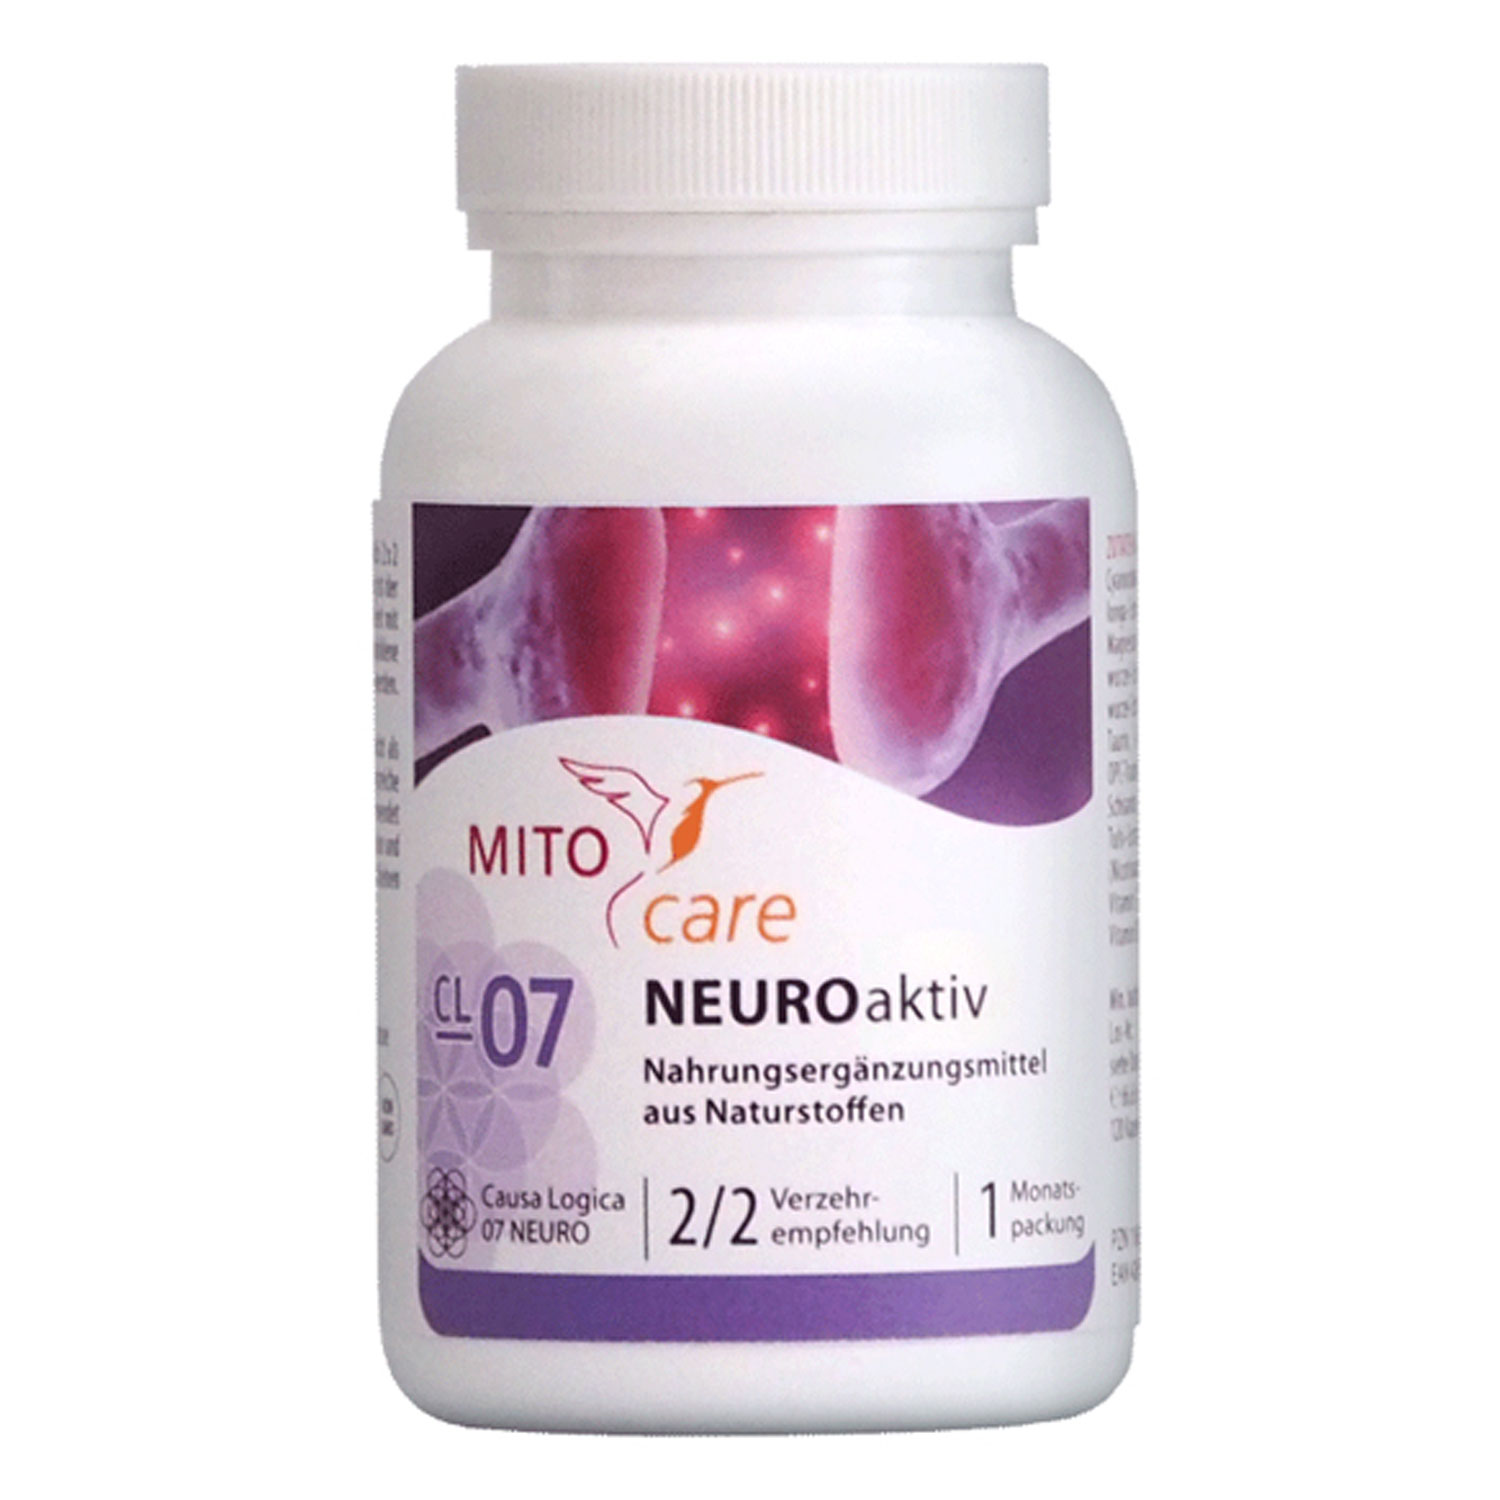  MITOcare® Neuroaktiv - 120 Kapseln